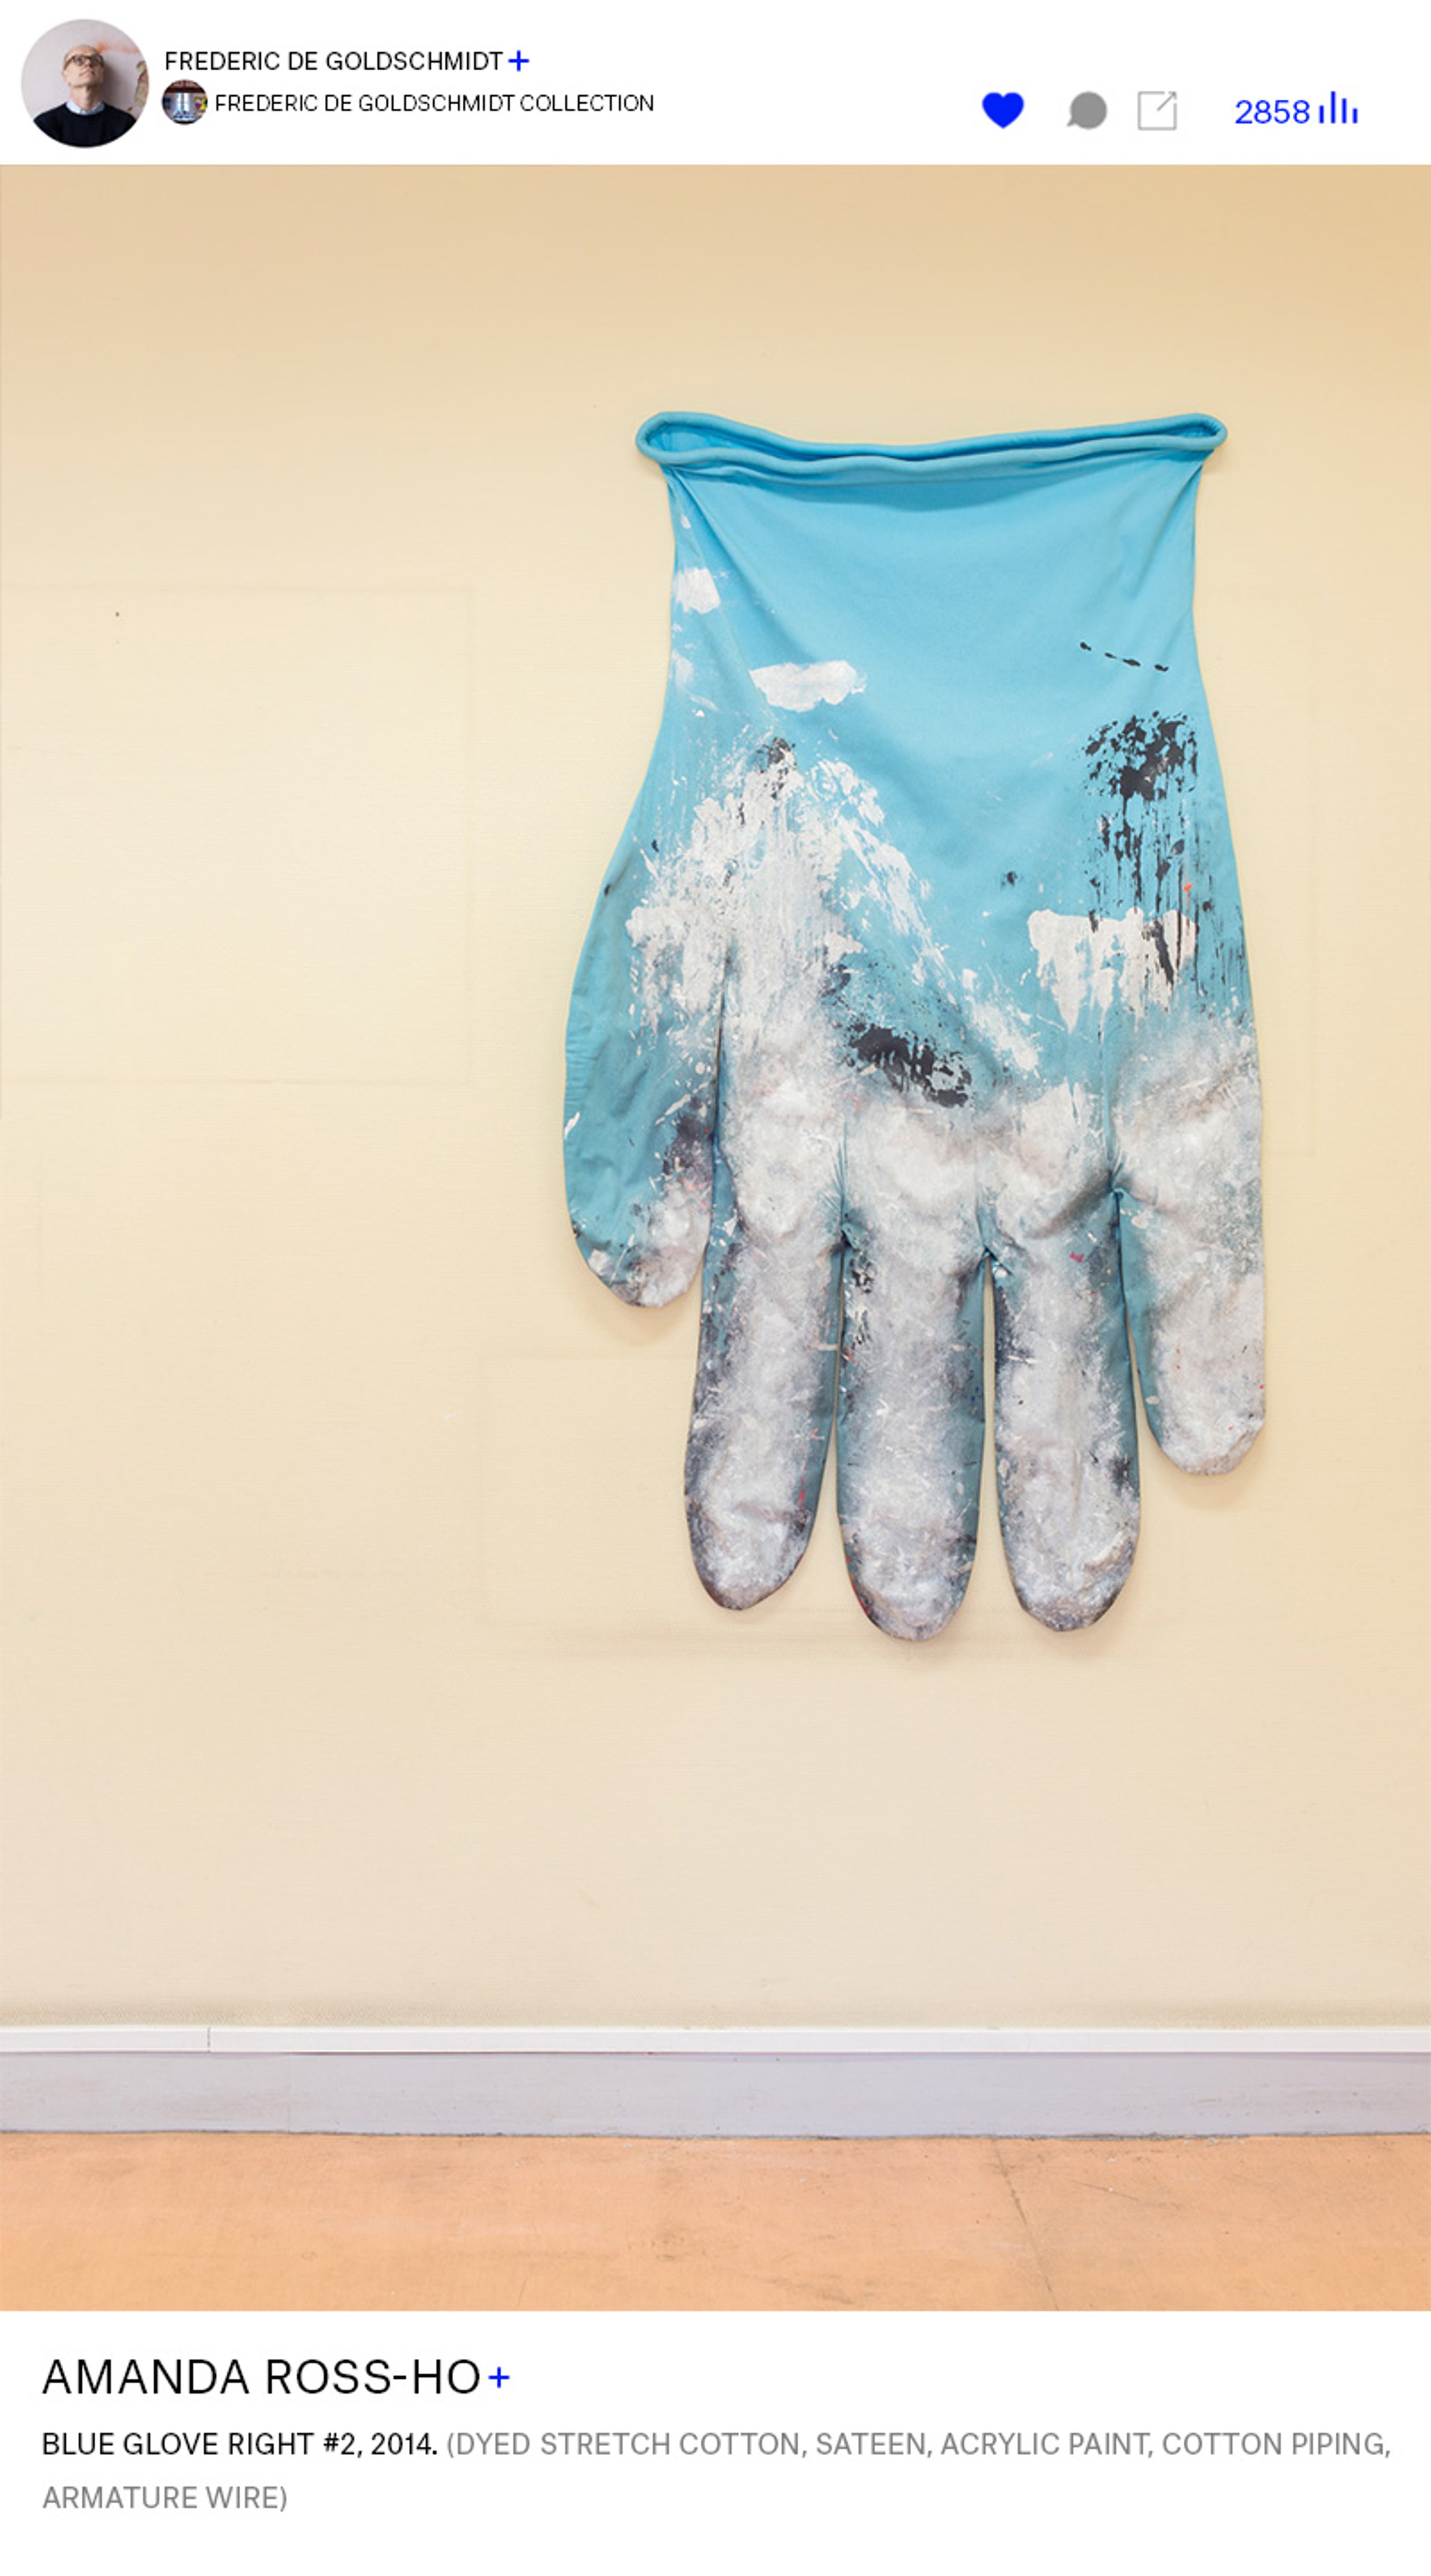 Amanda Ross-Ho - Blue Glove Right #2, 2014 on Frederic de Goldschmidt Collection, on Collecteurs